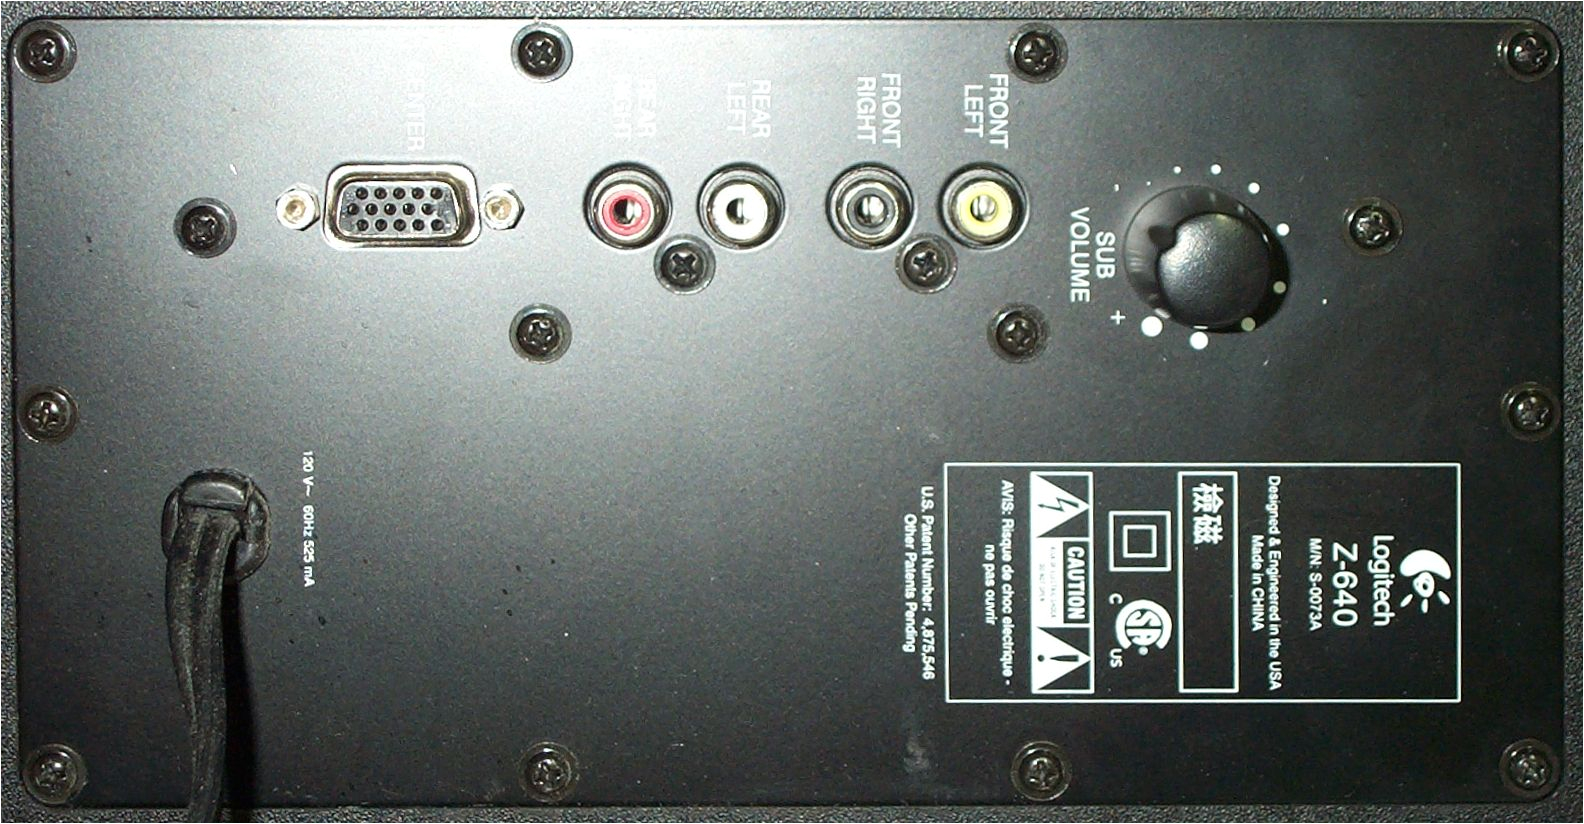 logitech z 640 subwoofer mod circuit board top view back panel